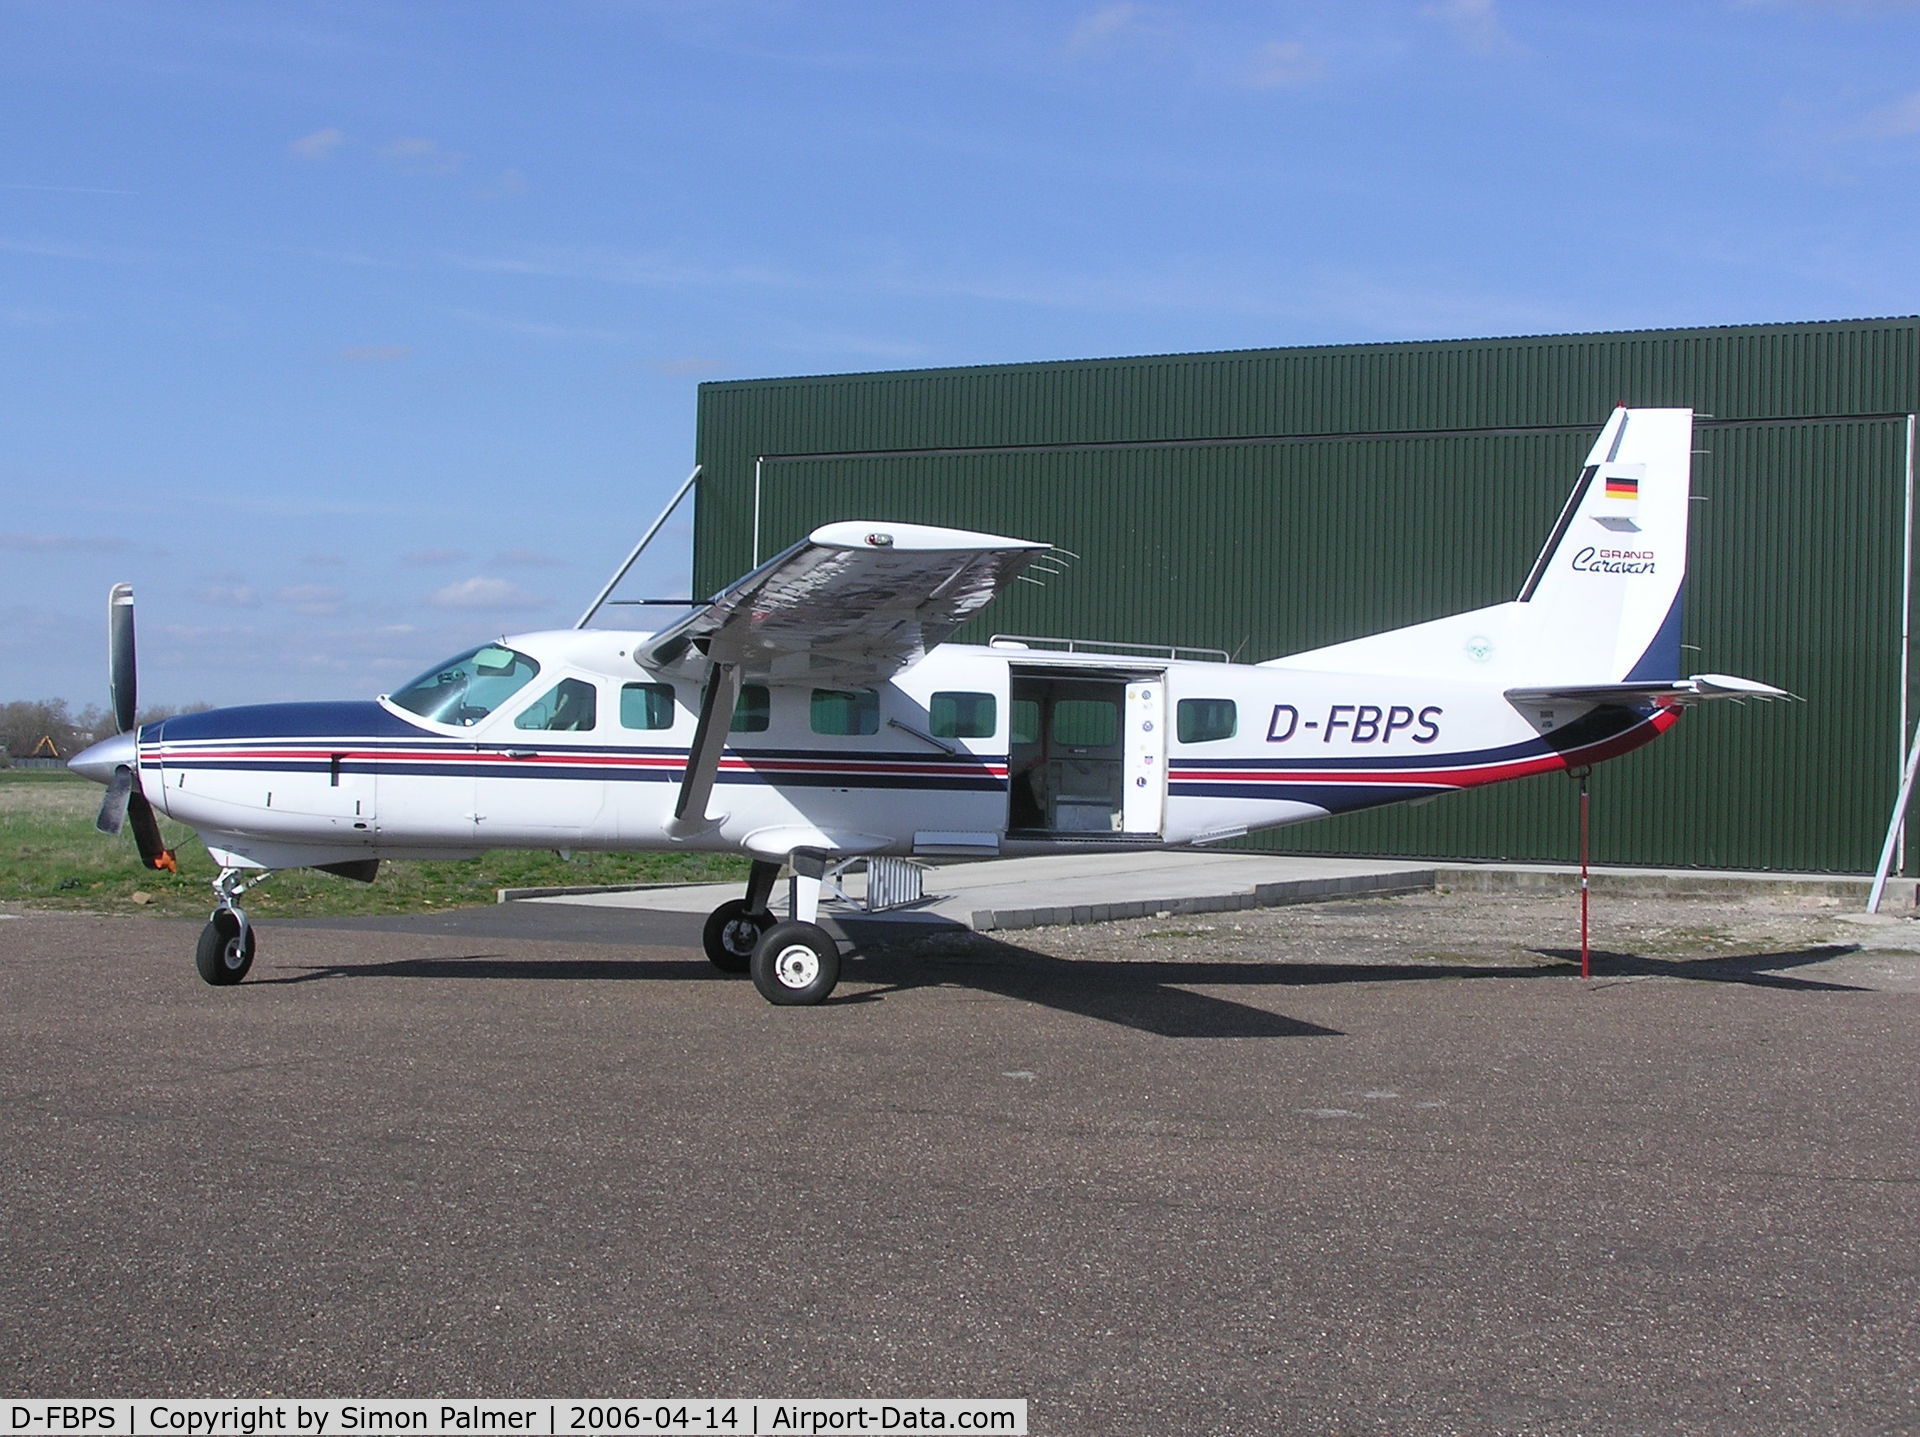 D-FBPS, 1998 Cessna 208B Grand Caravan C/N 208B0494, Cessna 208 Caravan awaiting jumpers at Langar